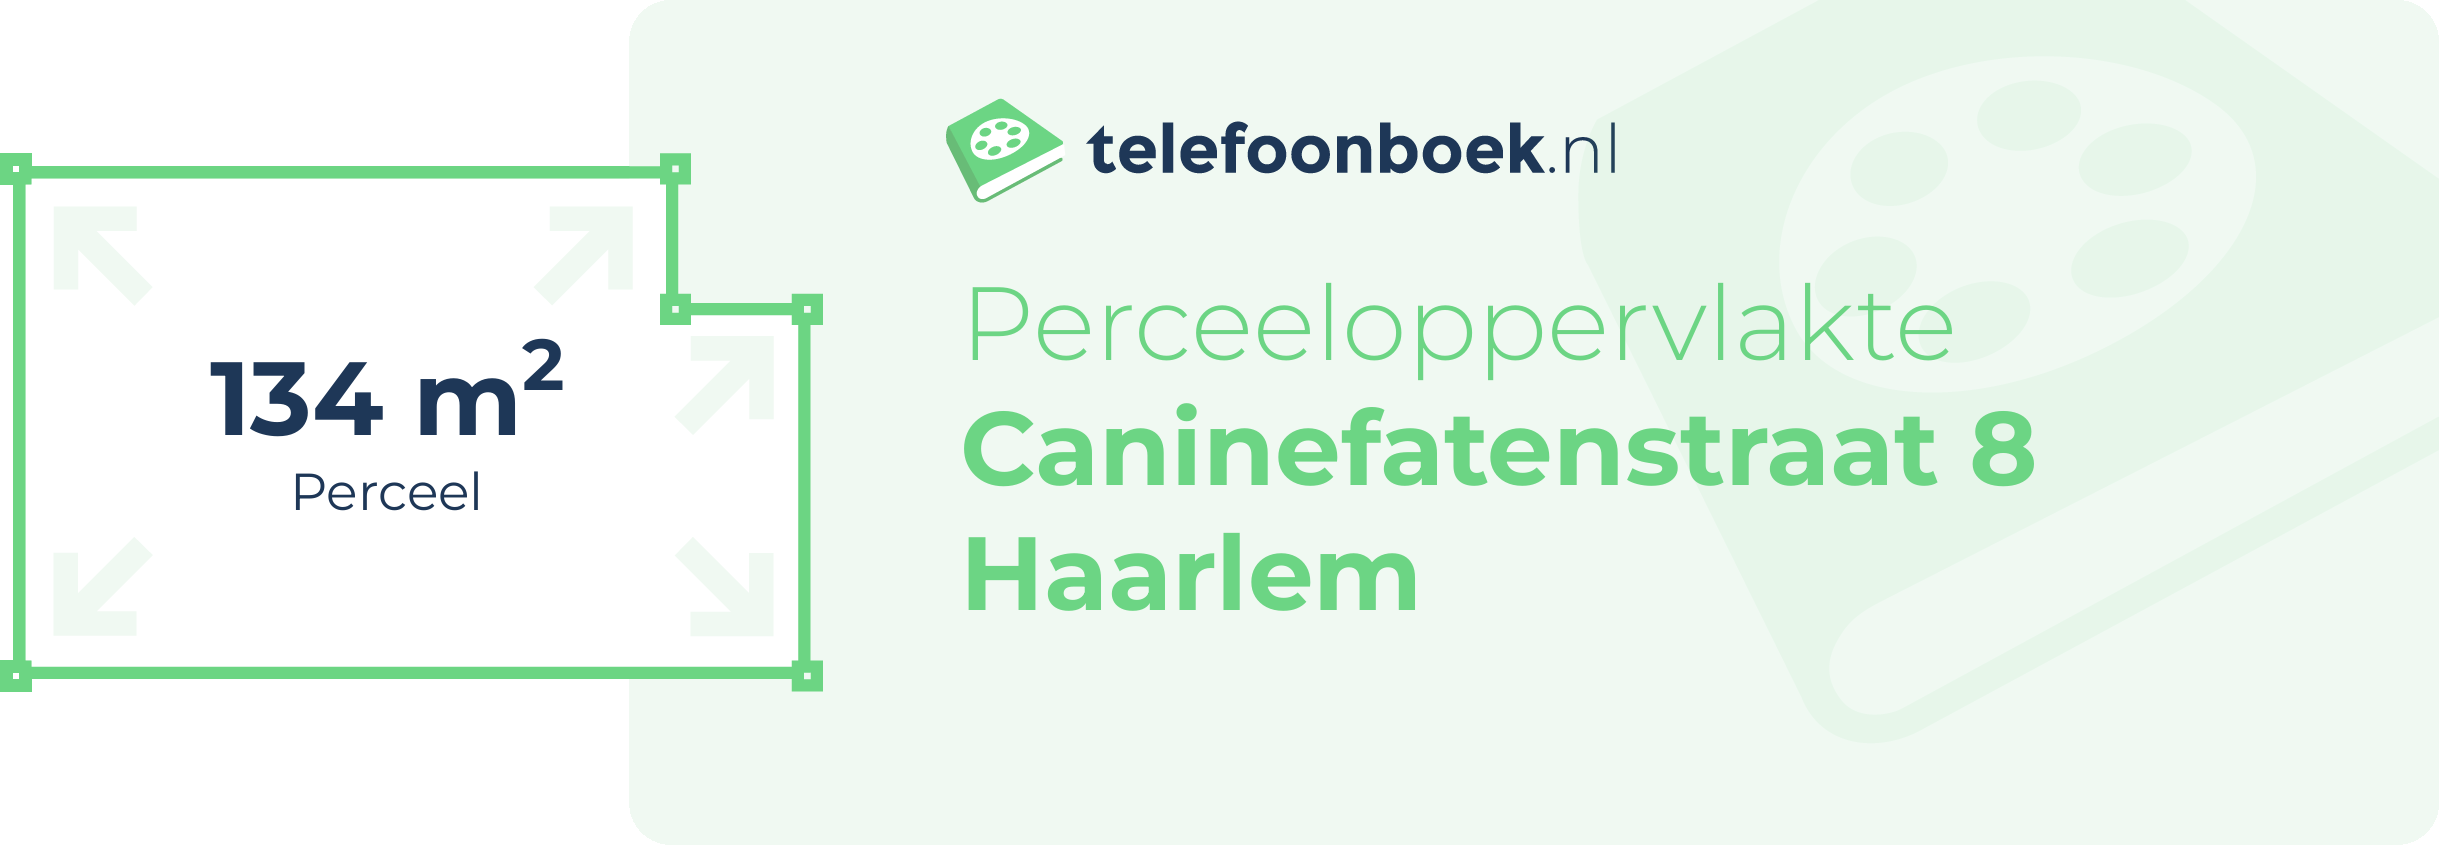 Perceeloppervlakte Caninefatenstraat 8 Haarlem